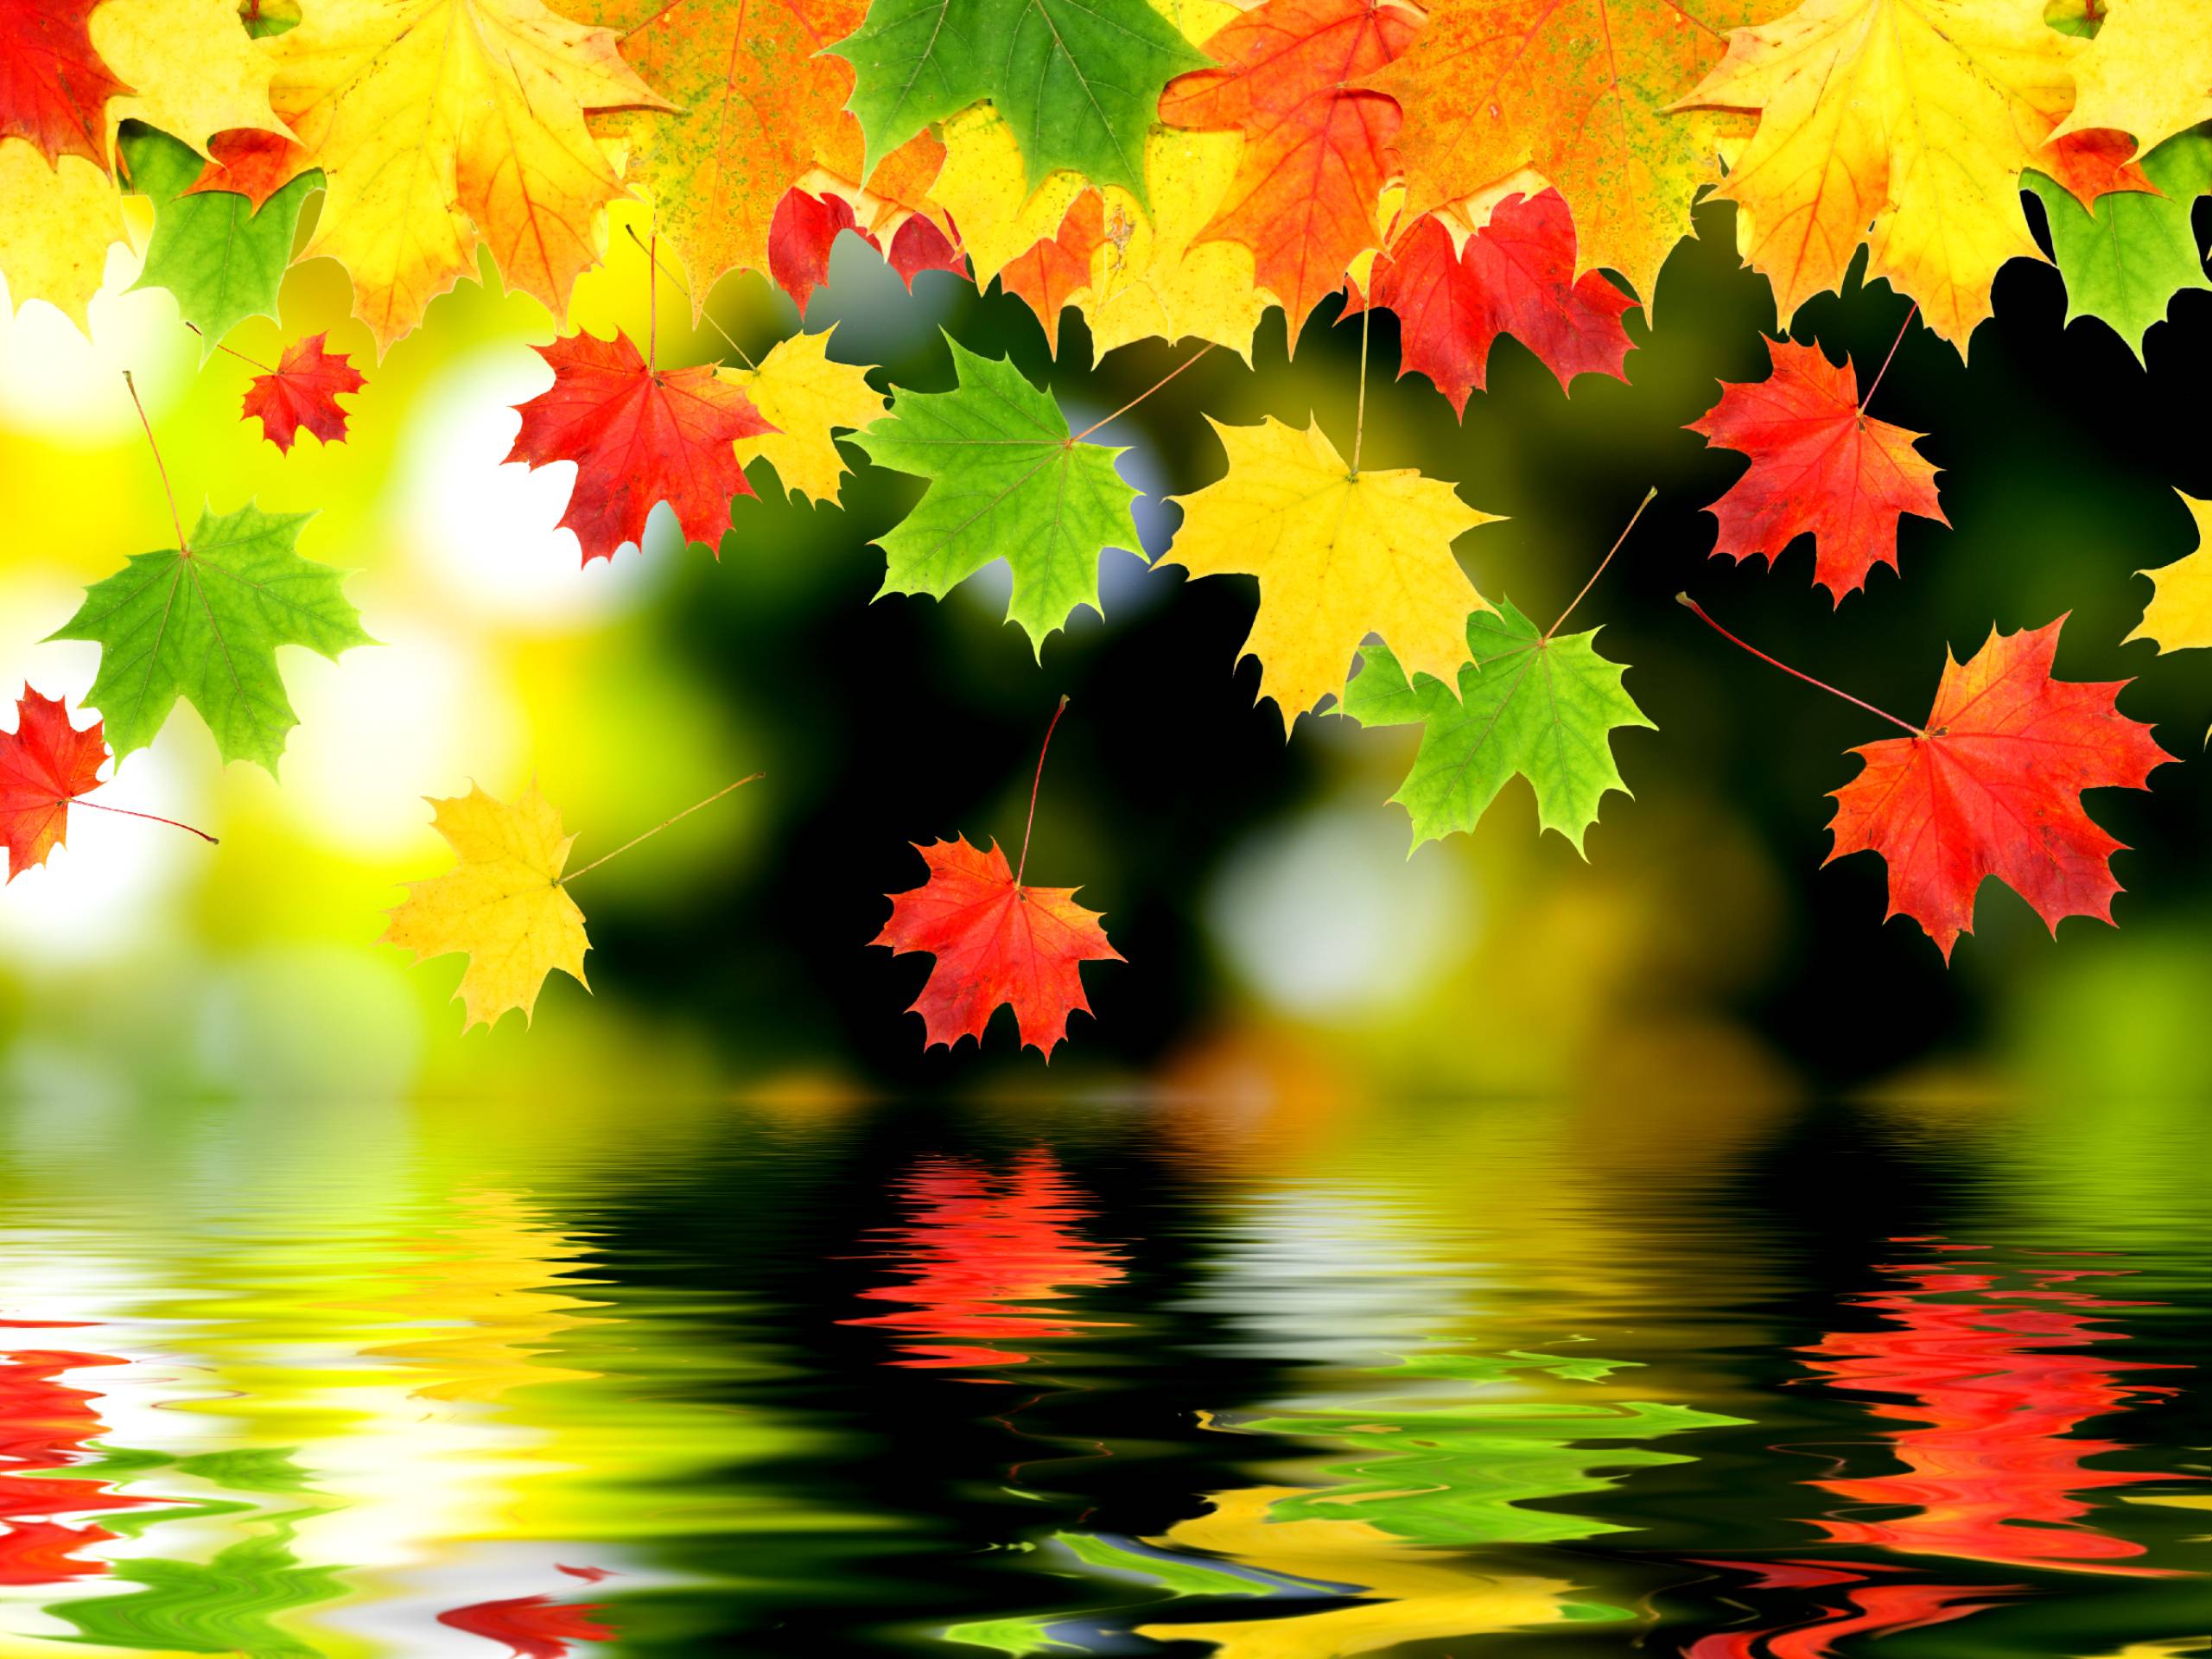 Autumn Computer Wallpaper, Desktop Background 2560x1920 Id: 188124